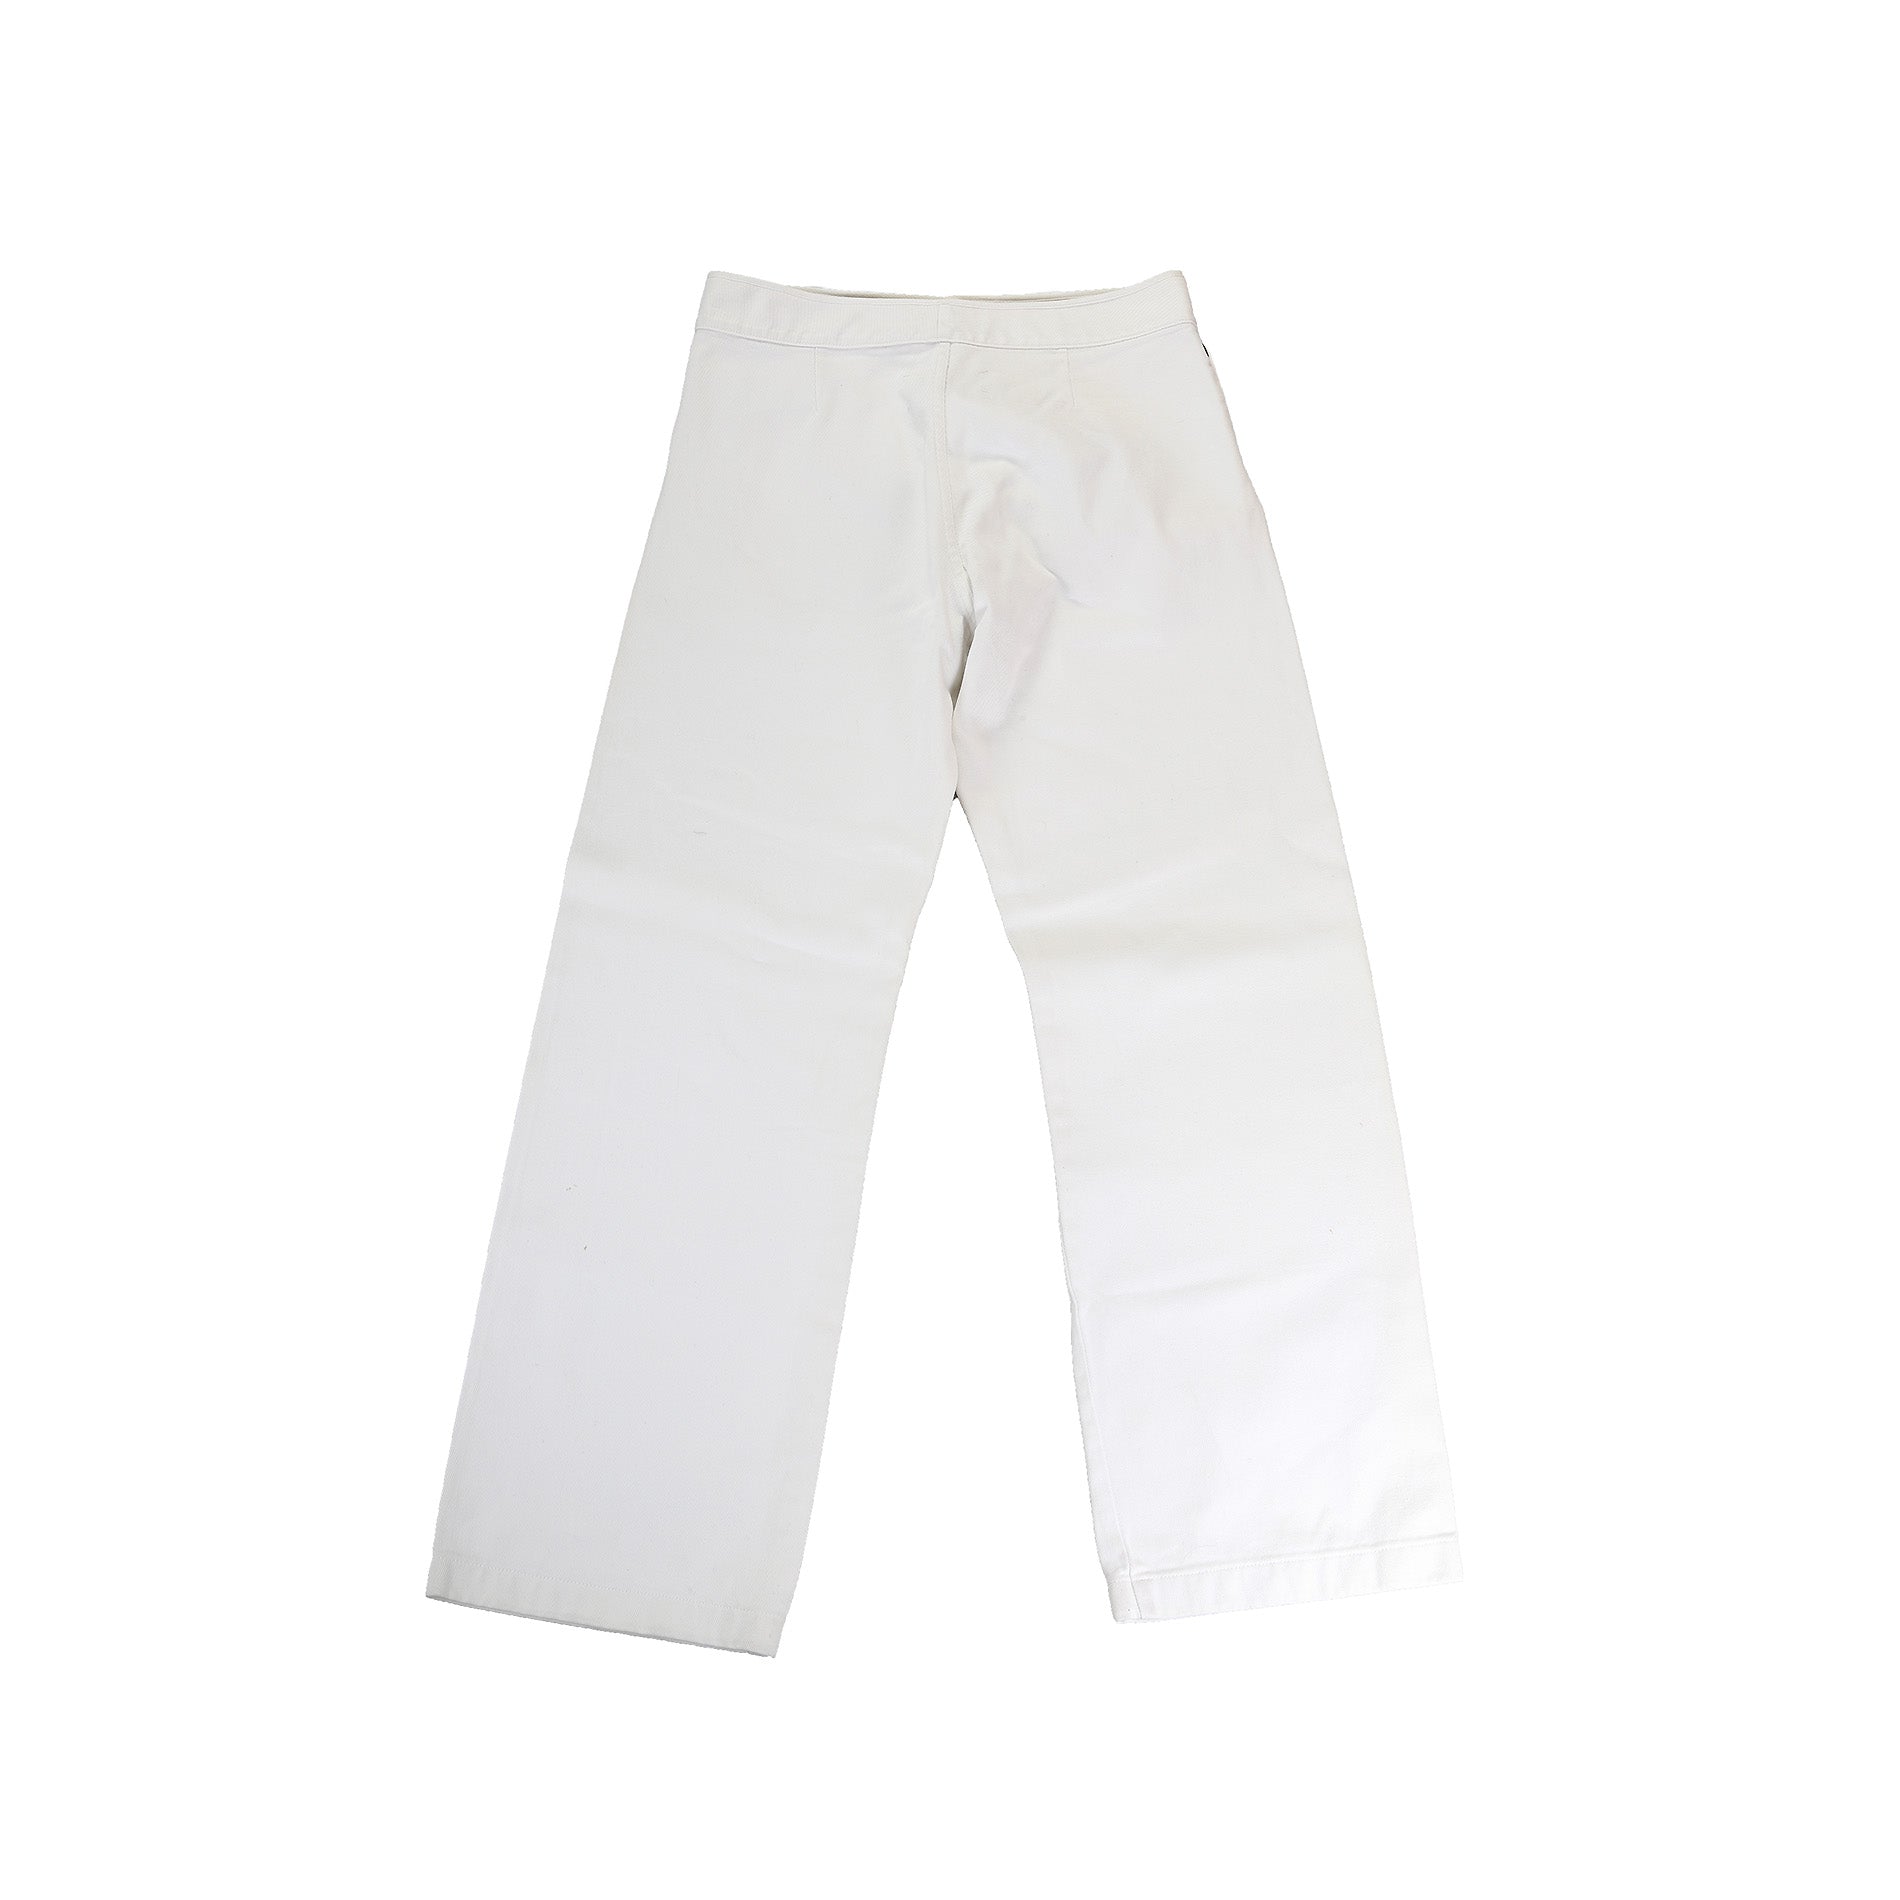 Maison Martin Margiela 2001 White Sailor Pants